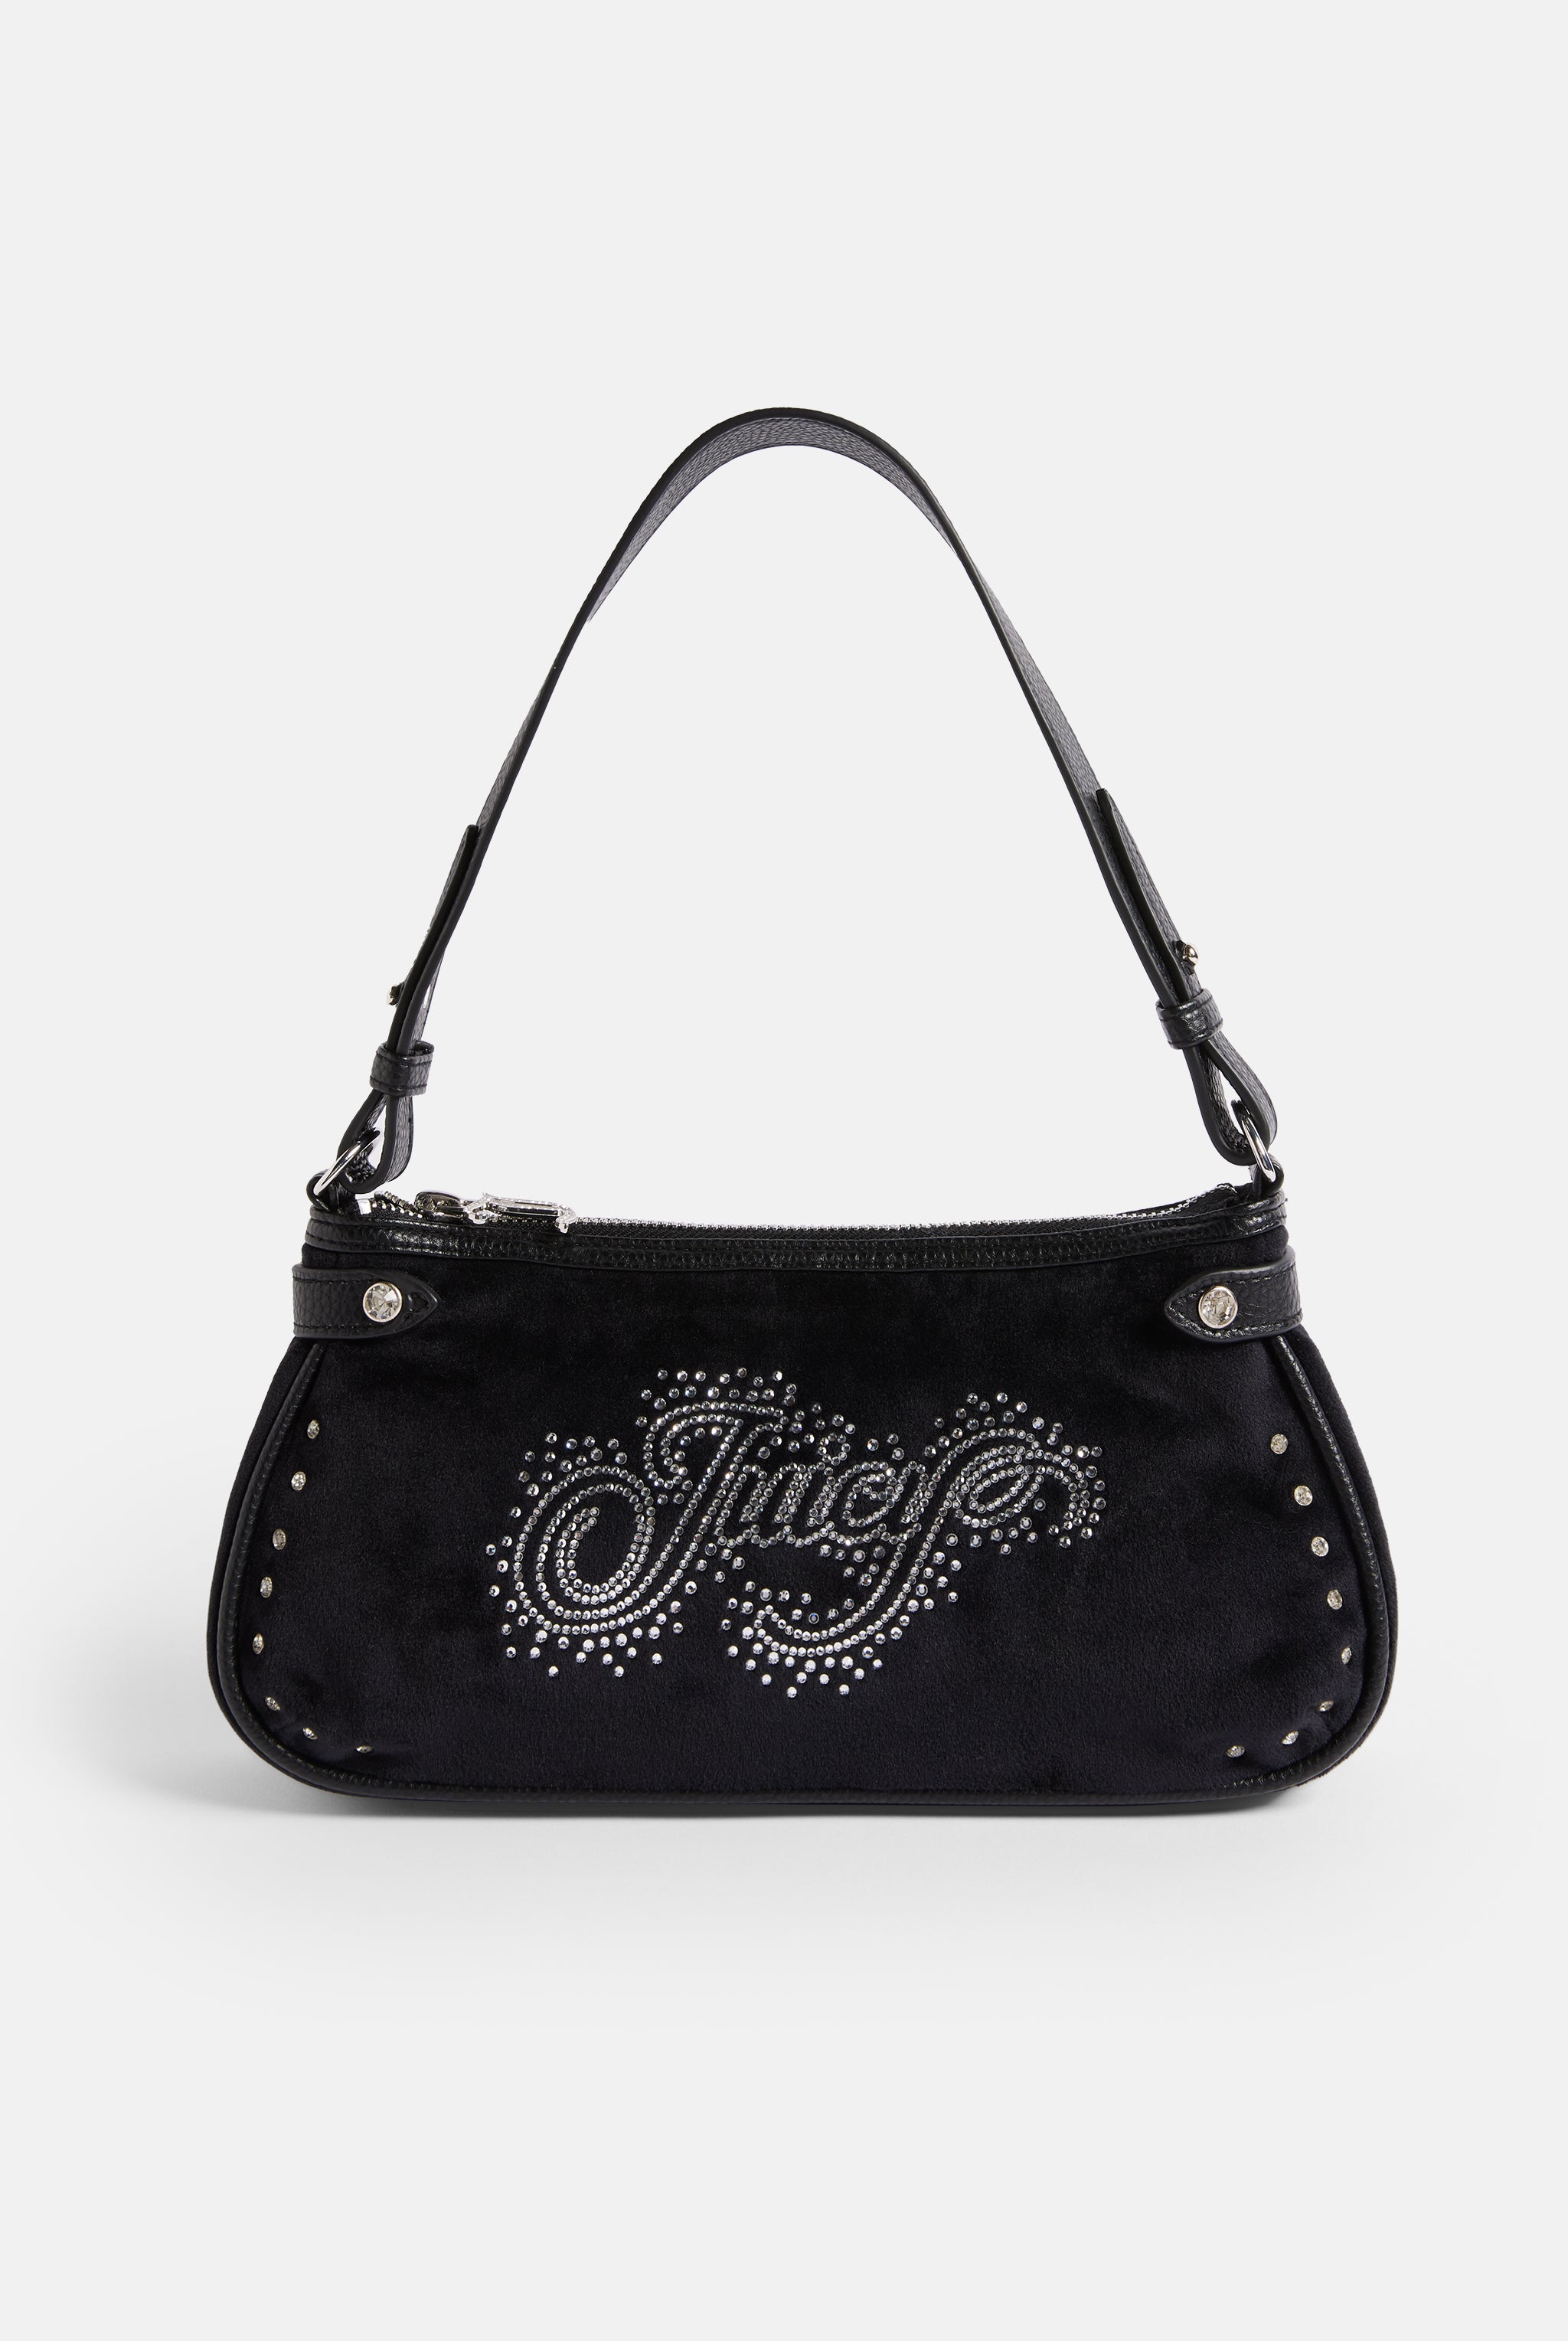 Juicy couture black rainbow hand bag $89 BNWT | Bags, Juicy couture,  Handbags